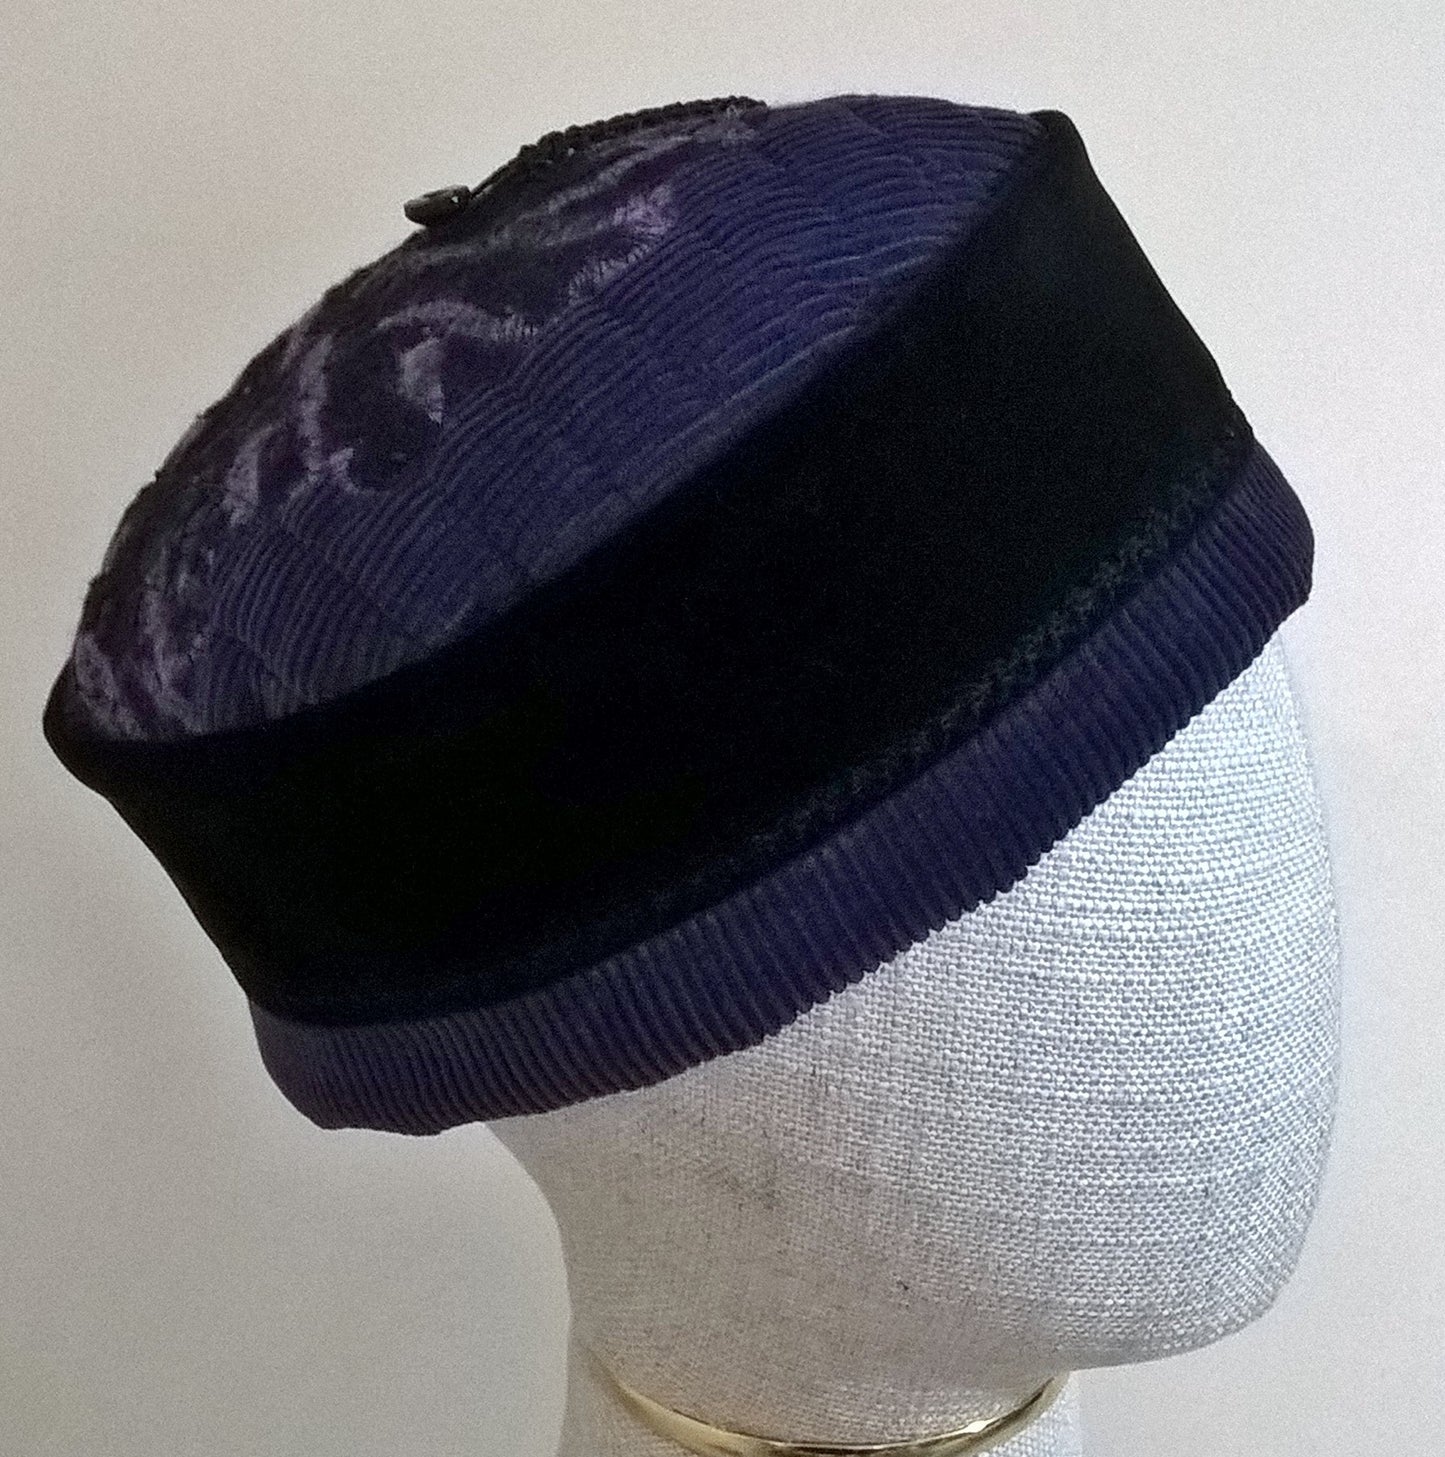 Original design smoking cap incorporating corduroy, velvet, needle felted wool and machine embroidery